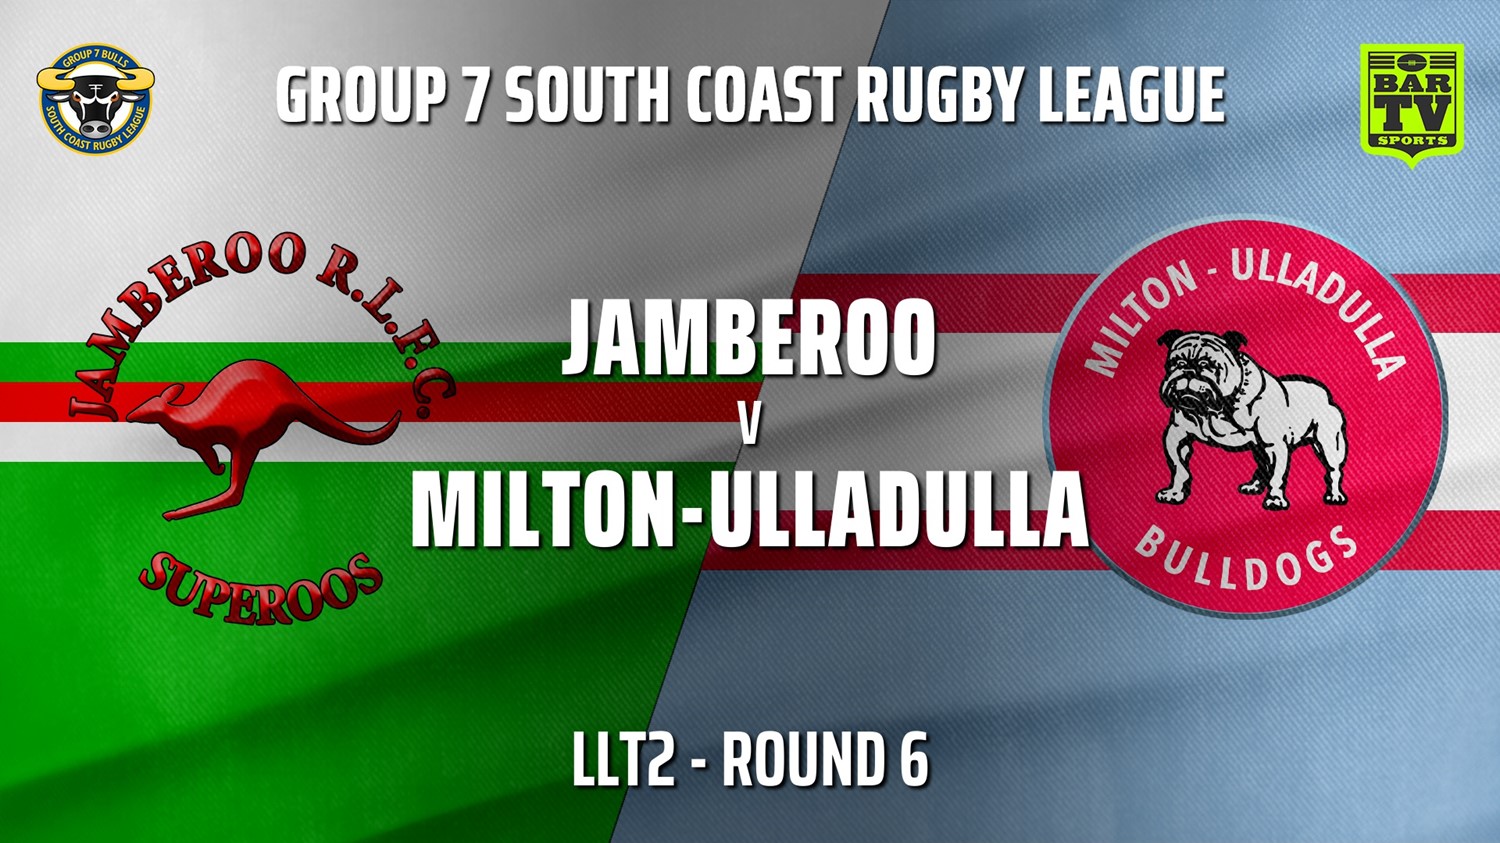 210522-Group 7 RL Round 6 - LLT2 - Jamberoo v Milton-Ulladulla Bulldogs Slate Image